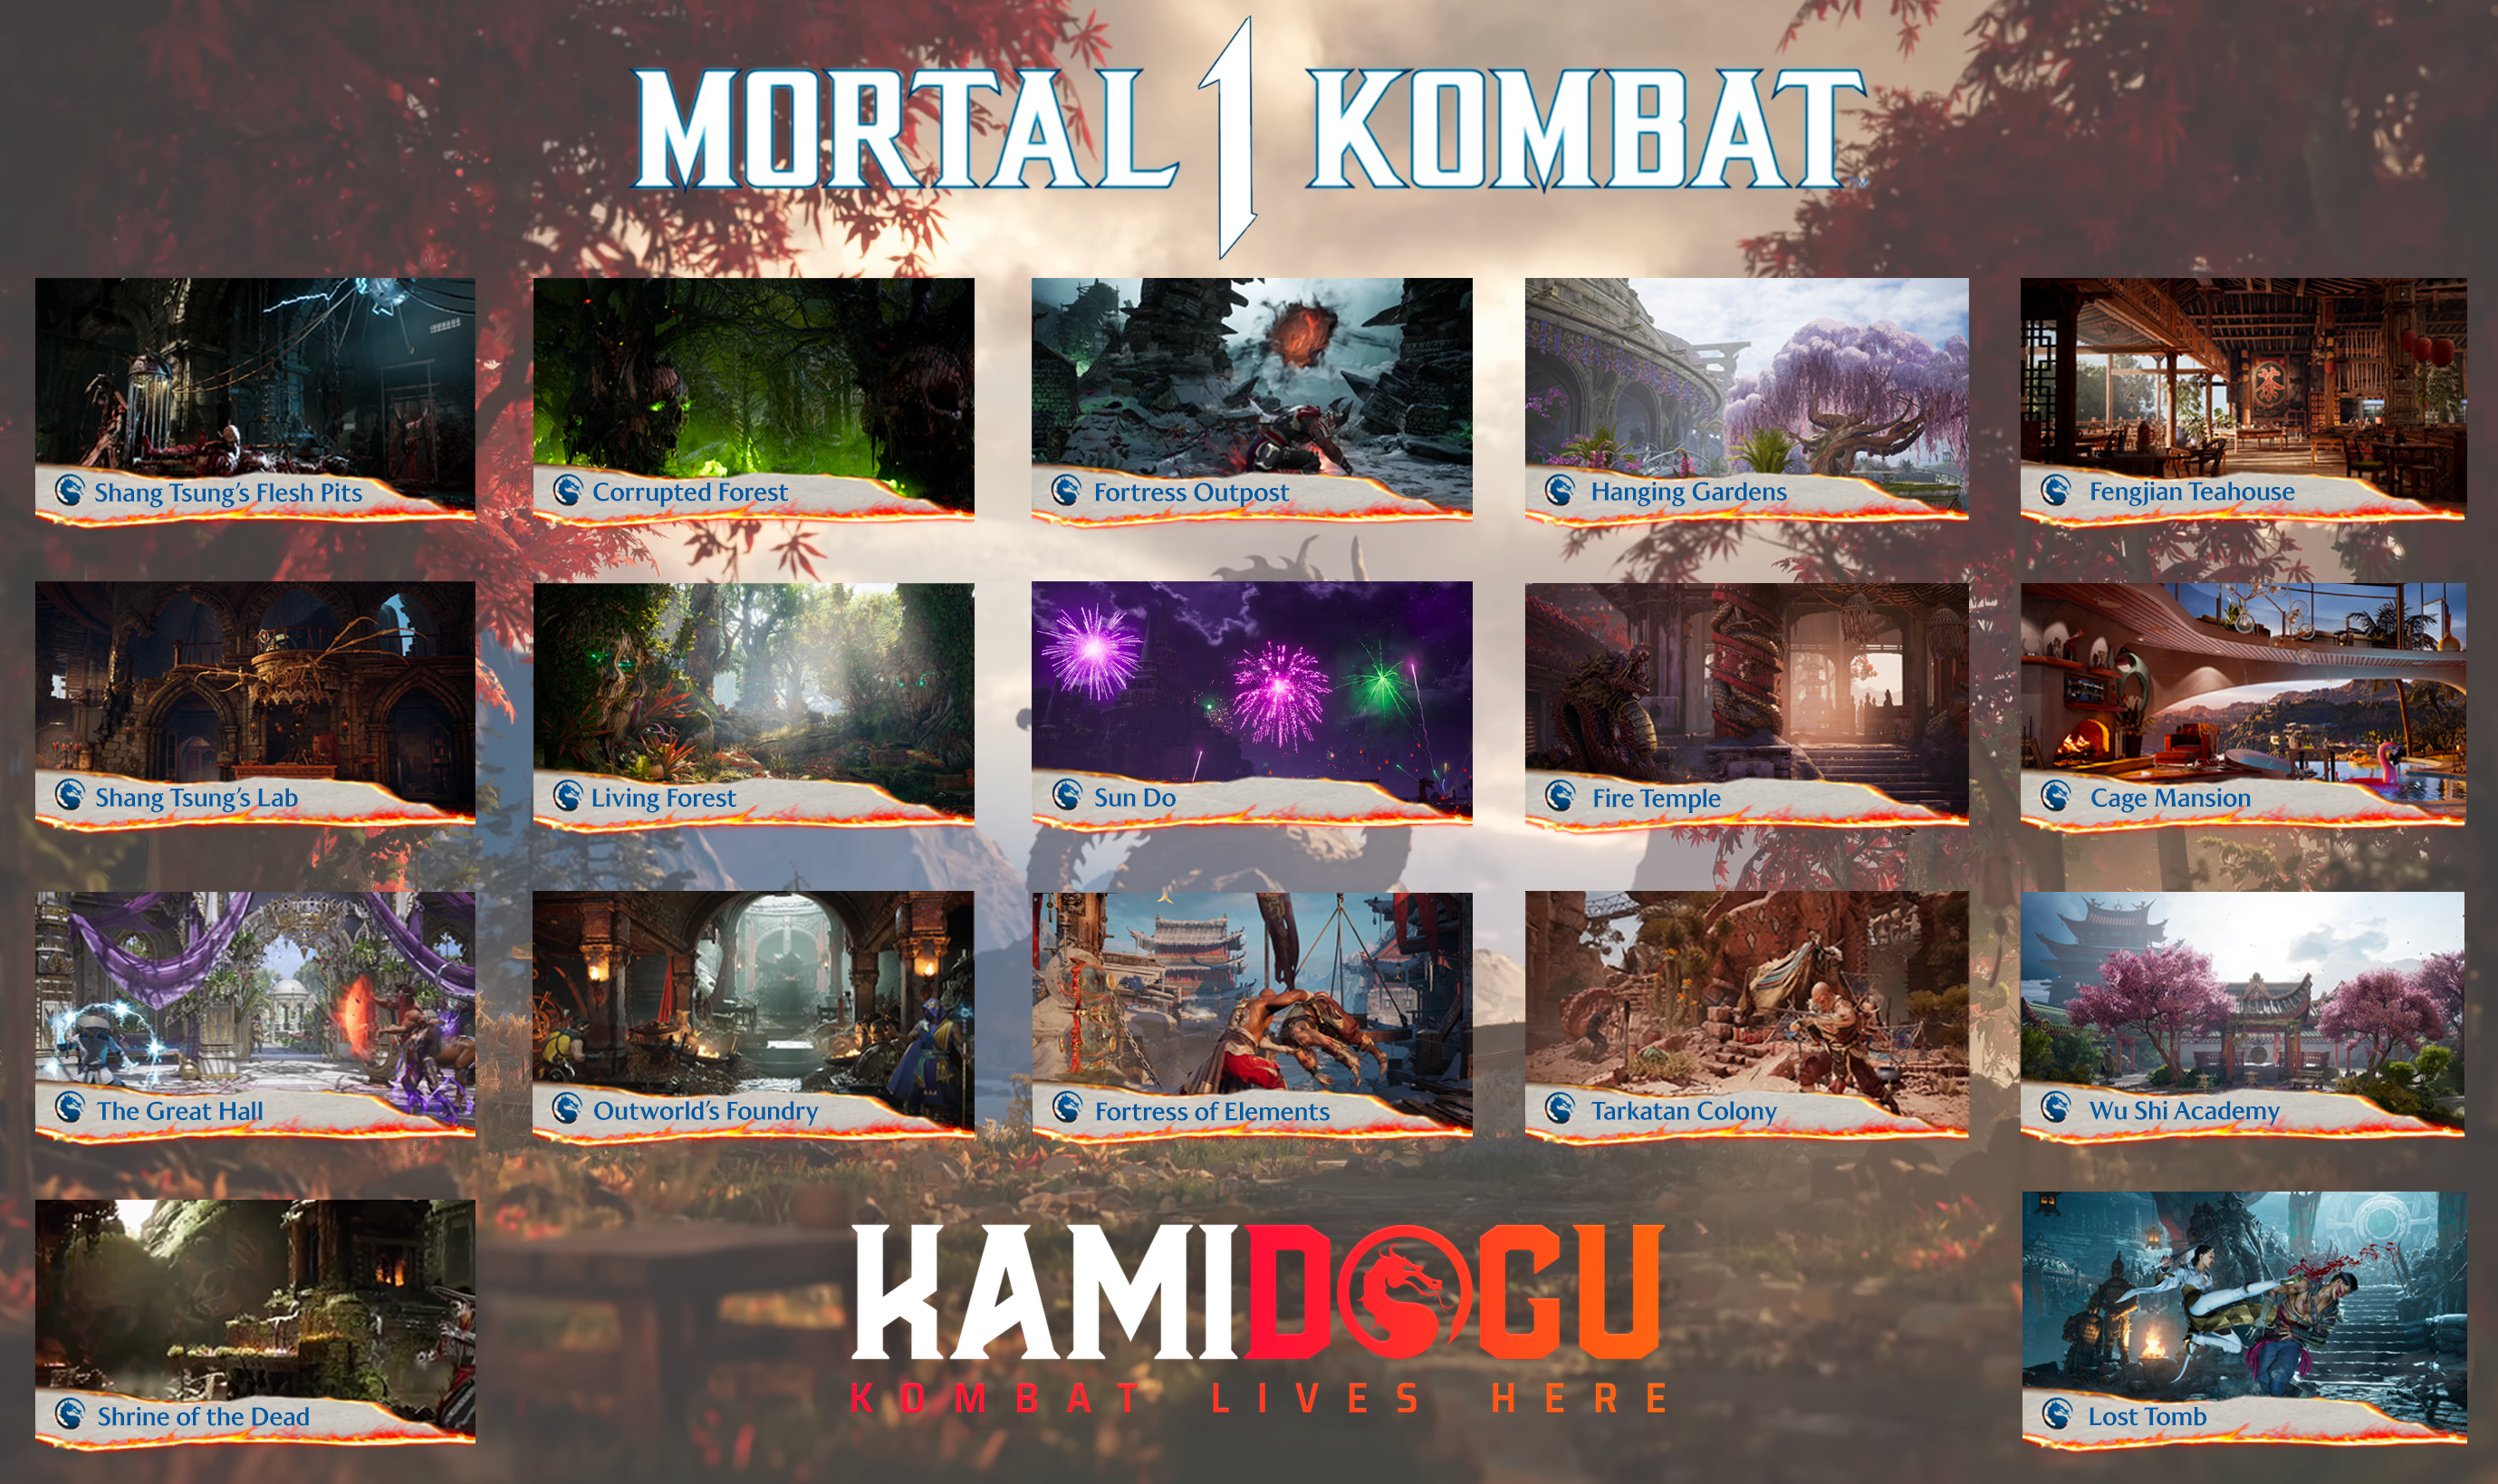 Mortal Kombat 1 Review: The Nostalgic New Era